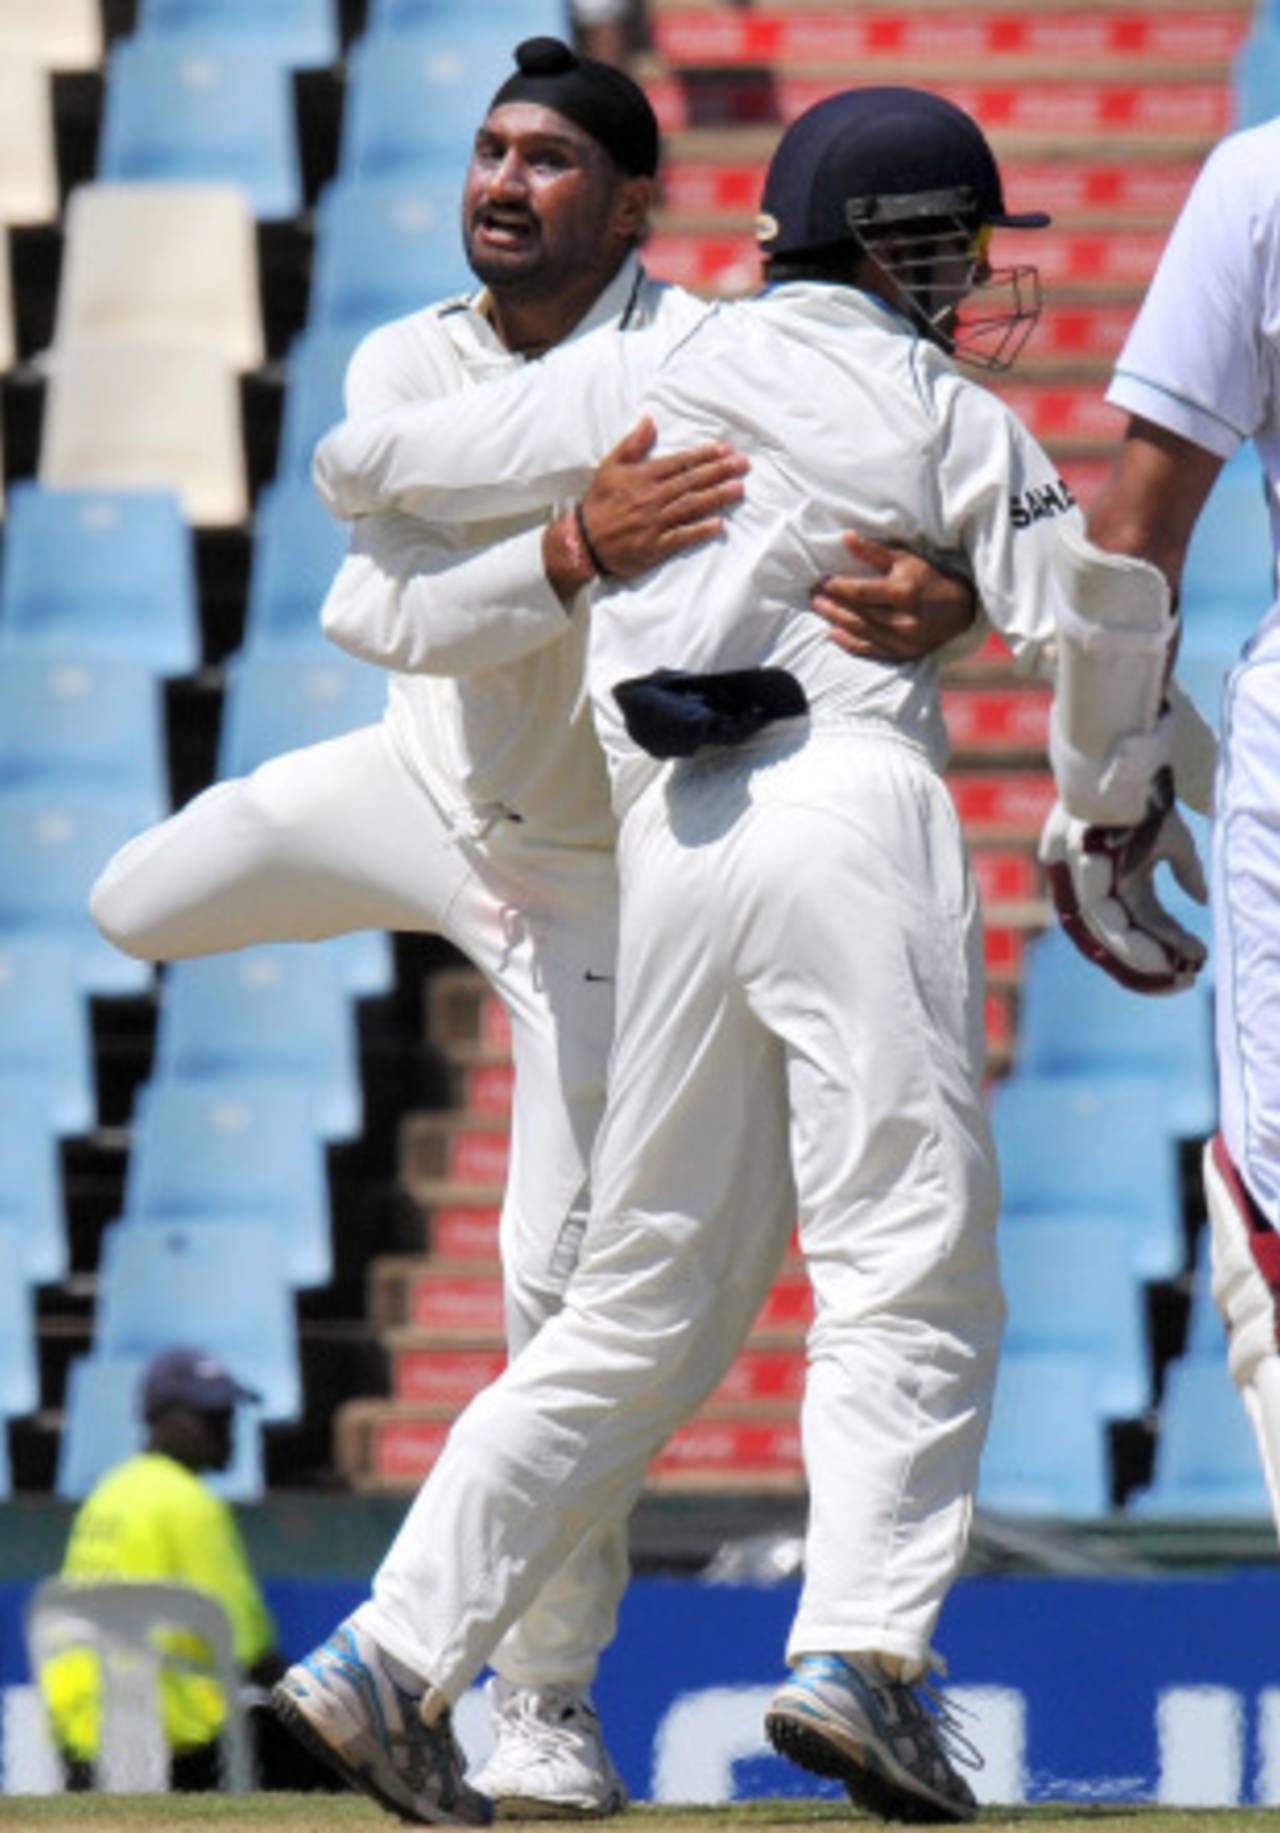 Harbhajan Singh and Gautam Gambhir celebrate the fall of Alviro Petersen, South Africa v India, 1st Test, Centurion, 2nd day, December 17, 2010 